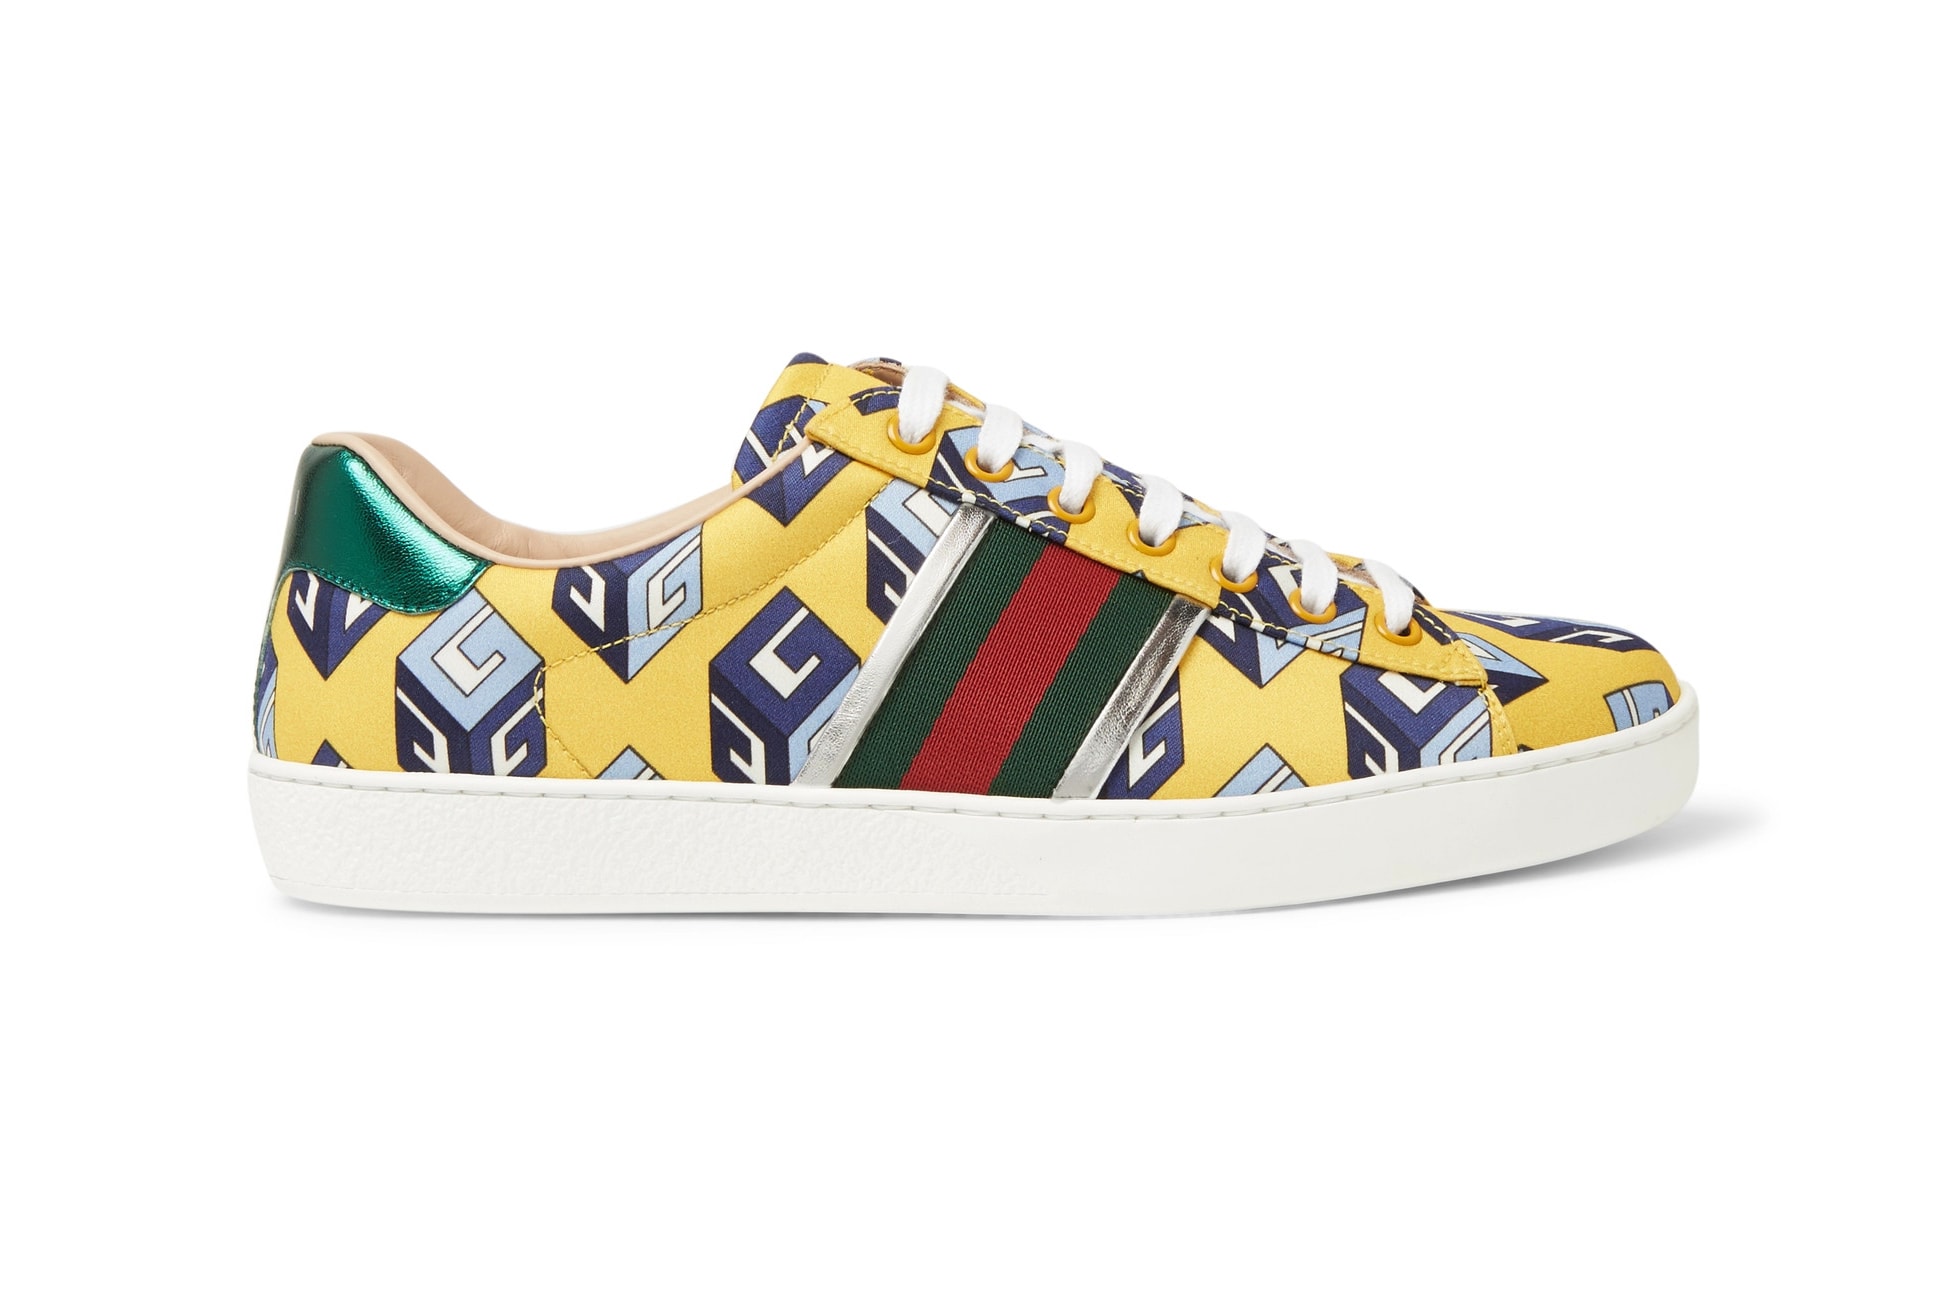 Gucci Ace Sneaker MR PORTER Exclusive